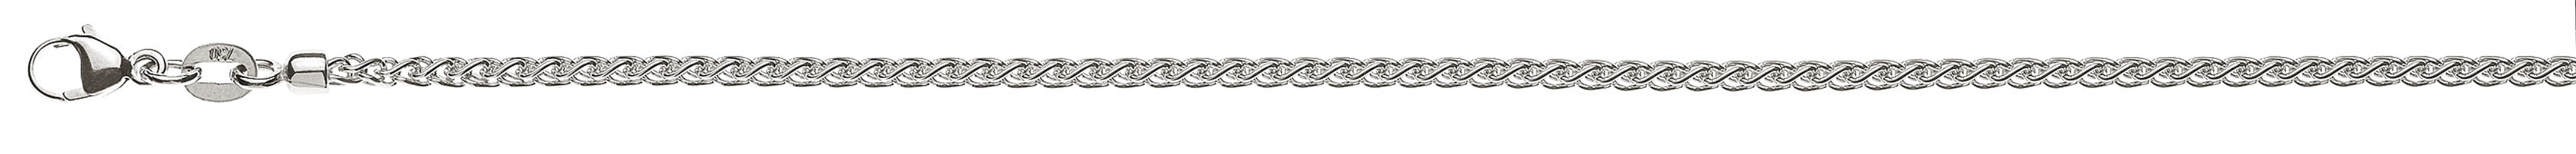 AURONOS Prestige Collier or blanc 18K chaîne câble 60cm 2.15mm